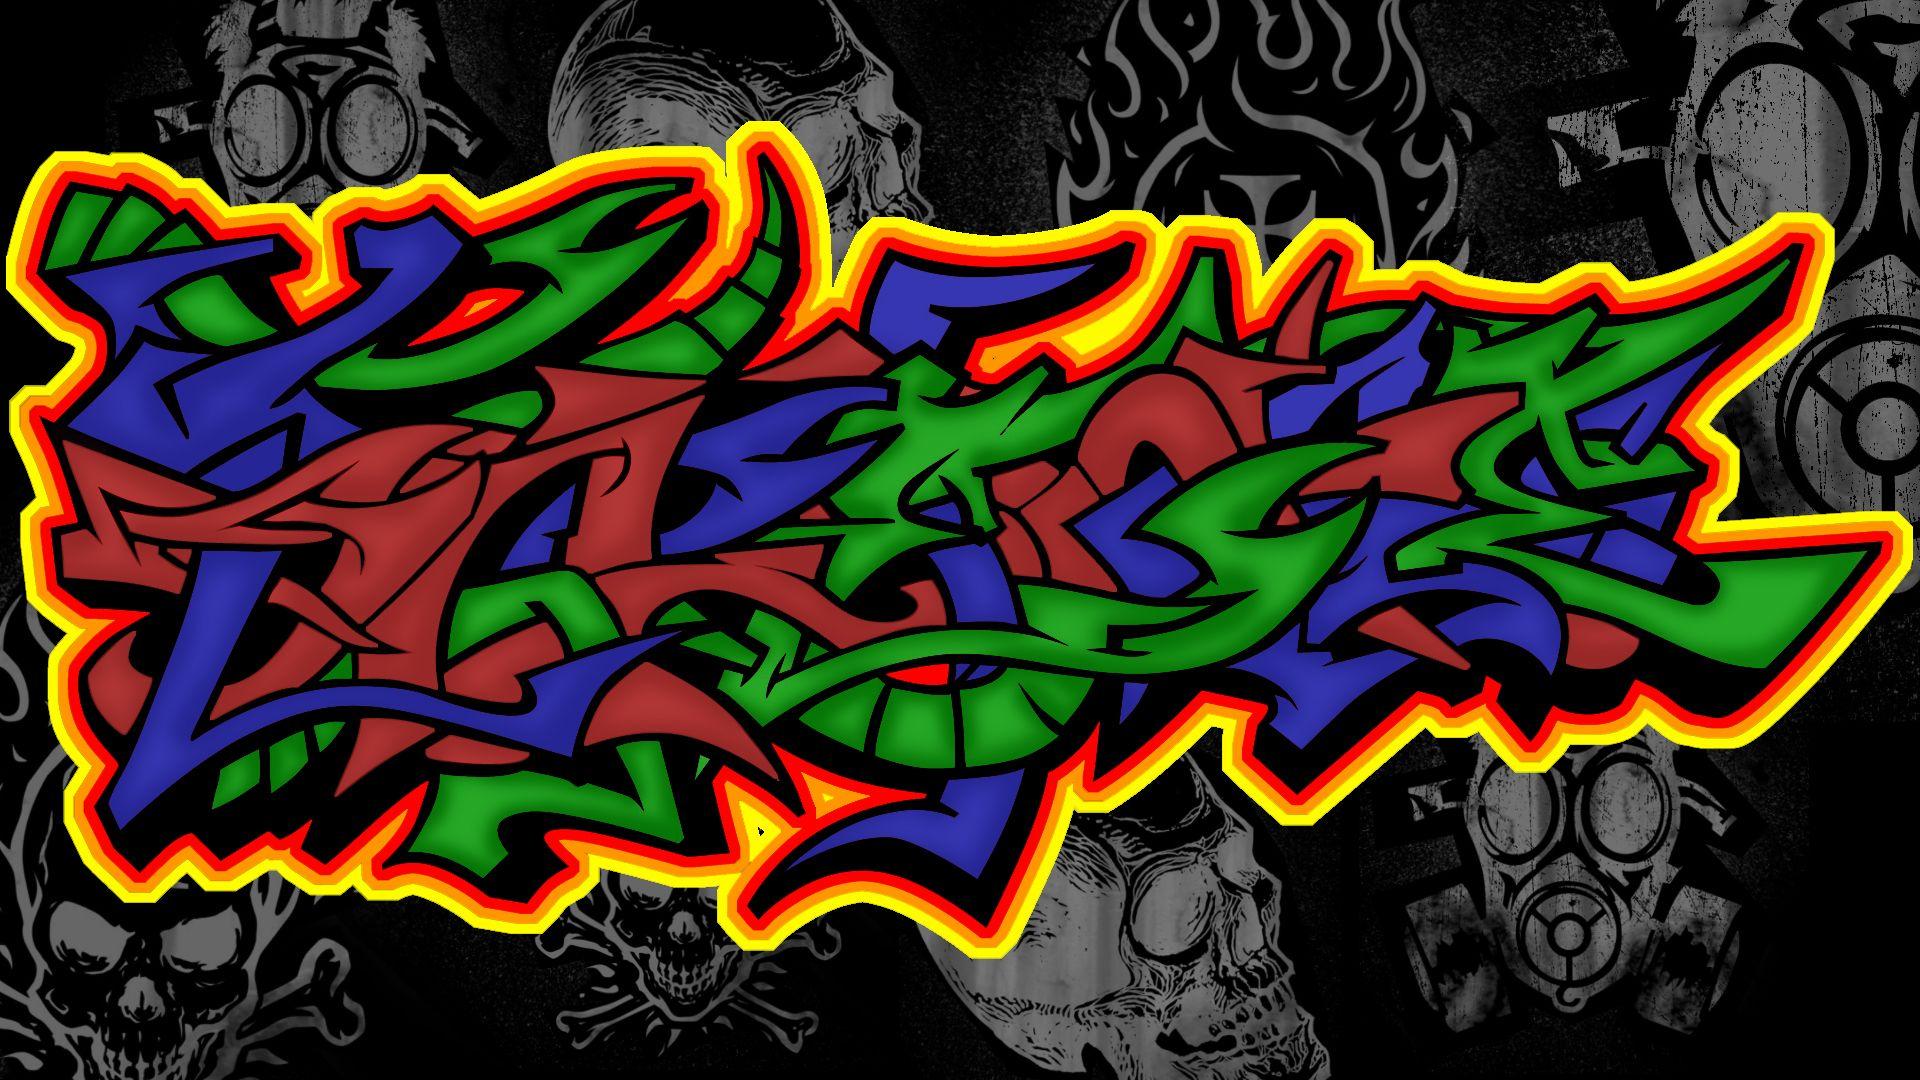 HD Graffiti Wallpaper and Photo. HD Art Wallpaper